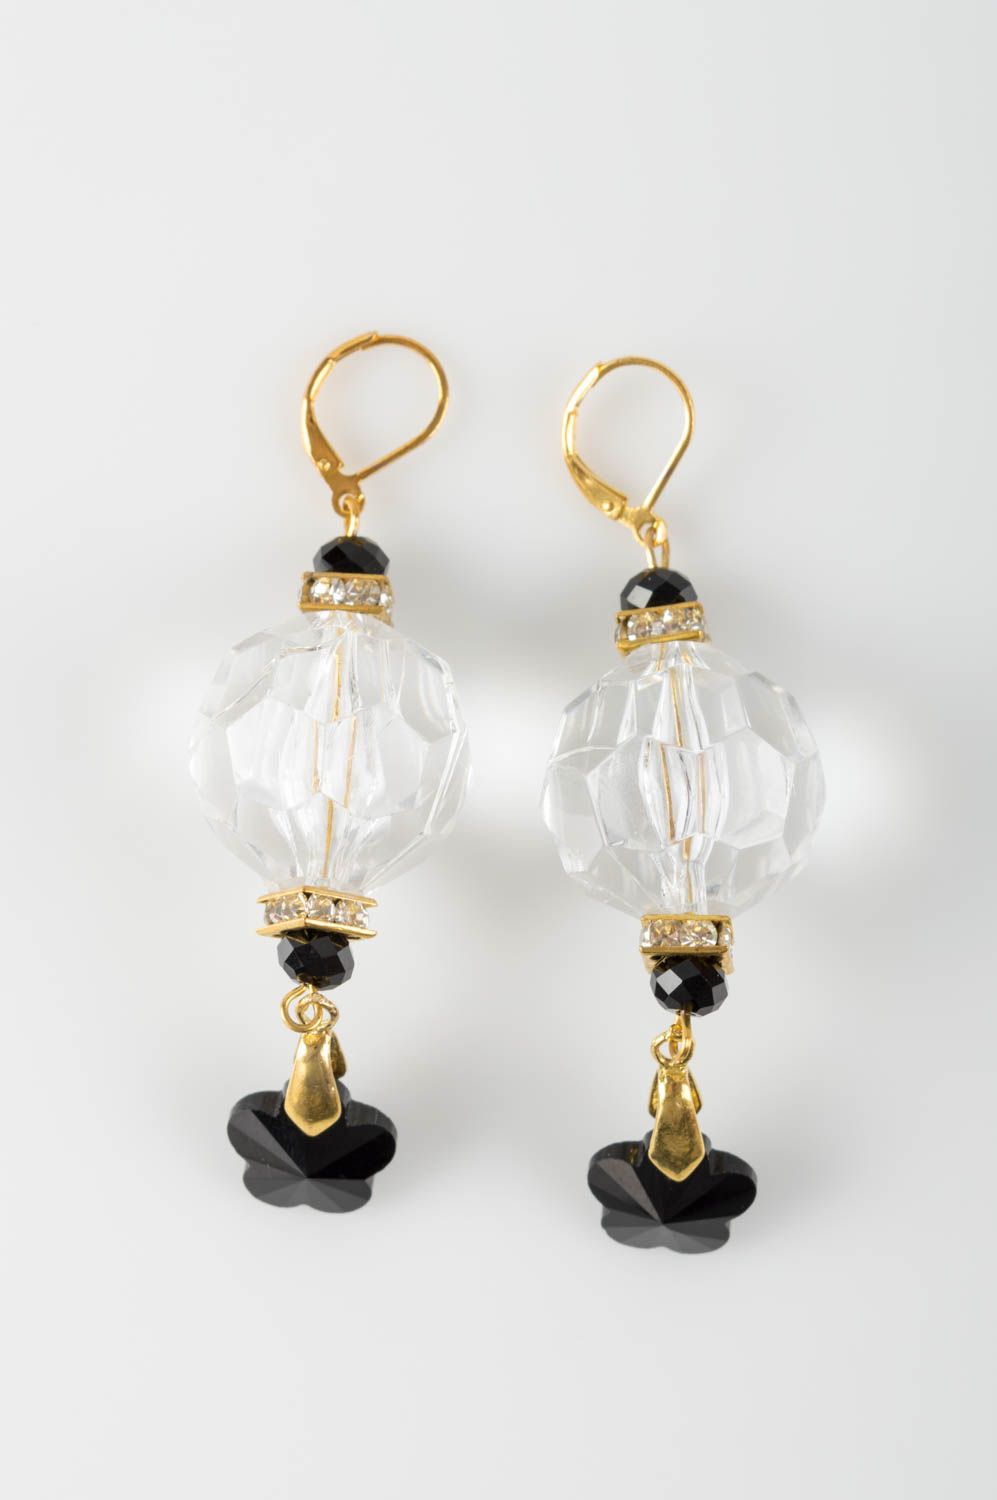 Handmade crystal earrings designer earrings with beads jewelry for women photo 2